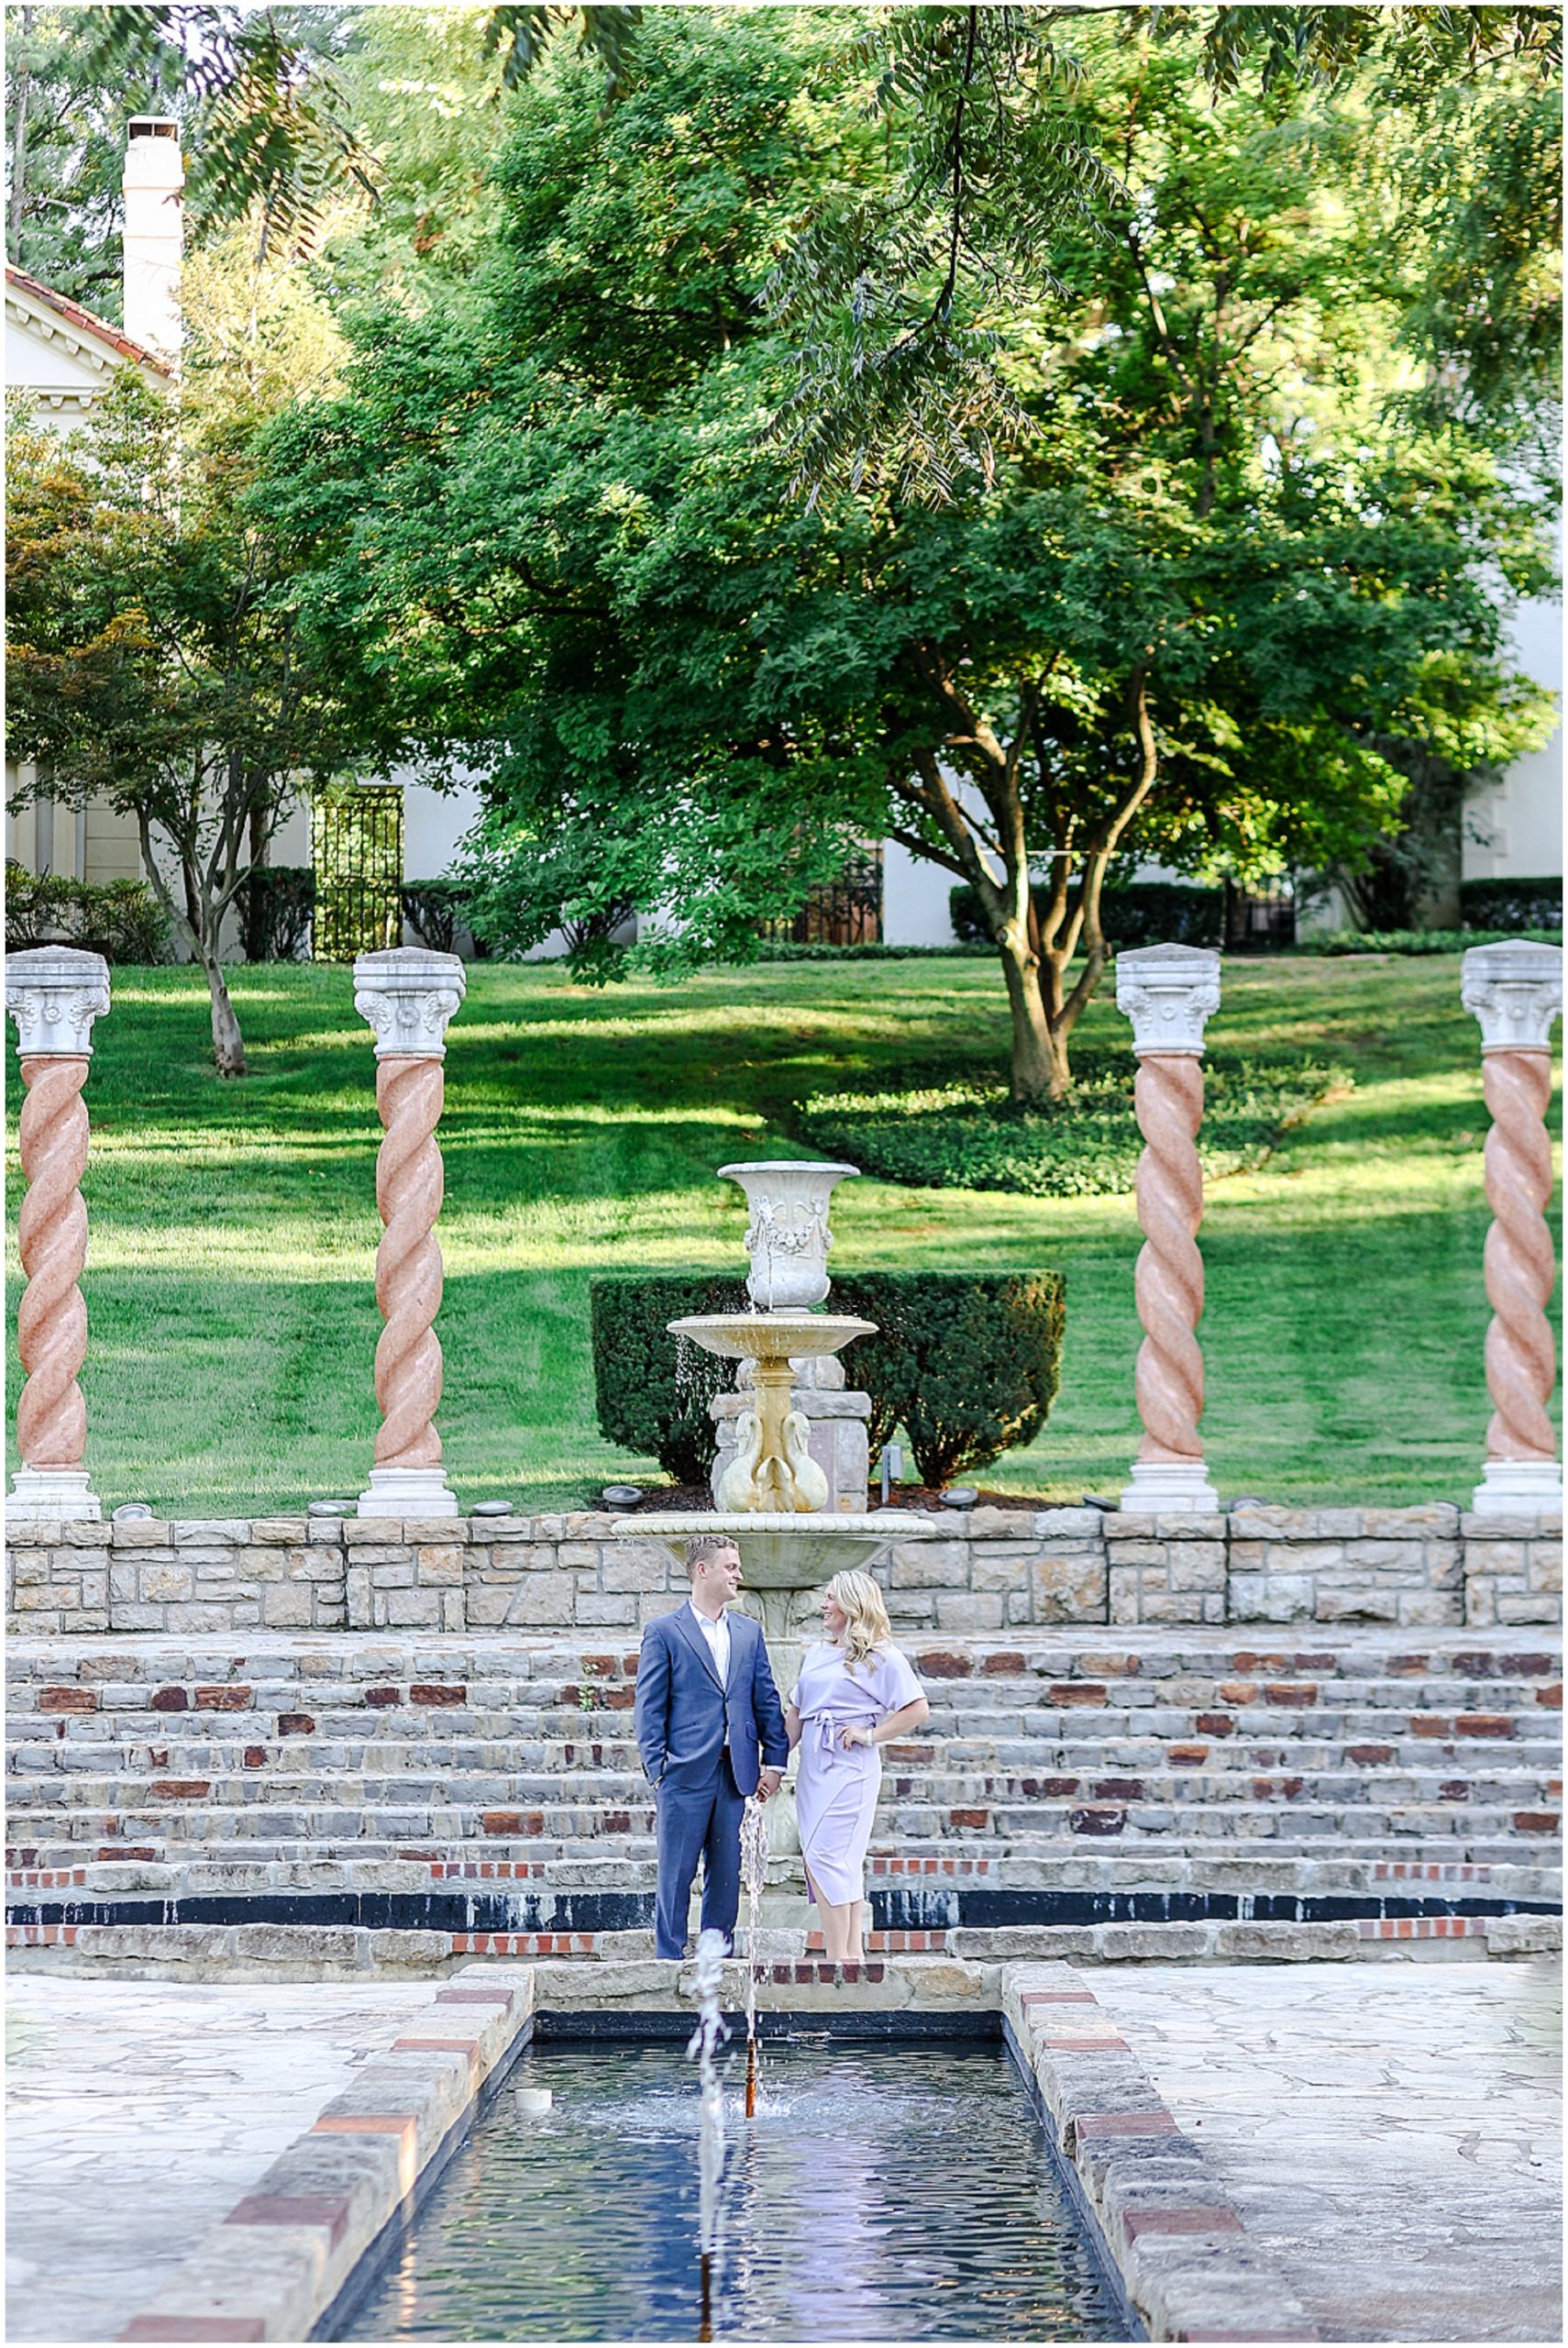 Caroline & Nick's Engagement Portraits in Kansas City - The KC Plaza - Luxury Wedding Photography  - Verona Columns 